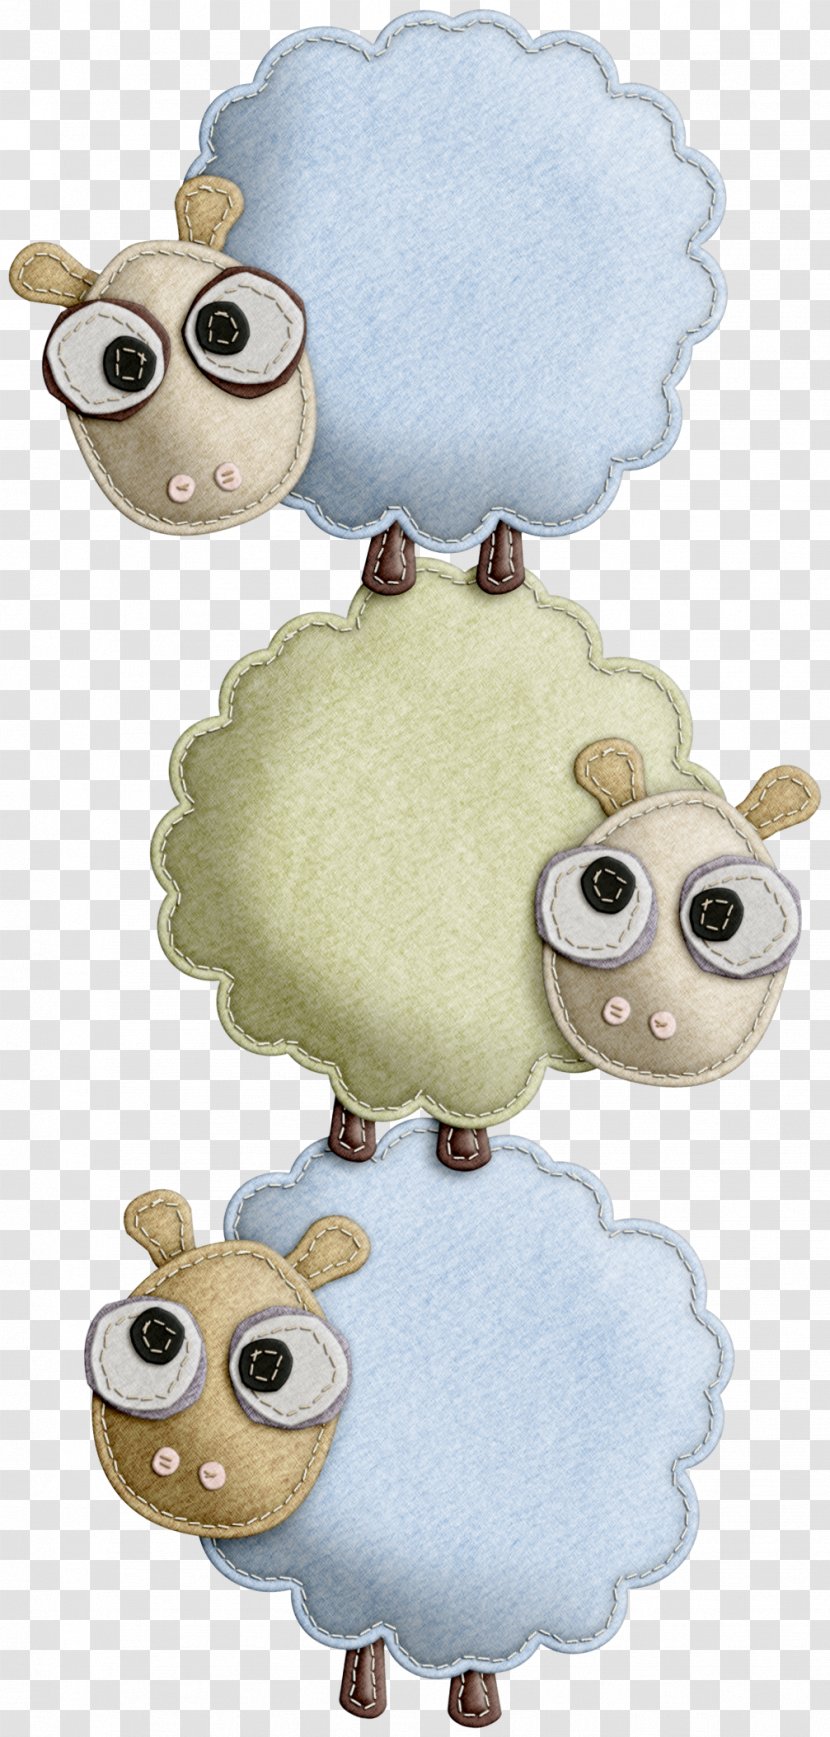 Sheep Stuffed Animals & Cuddly Toys Animated Cartoon Transparent PNG